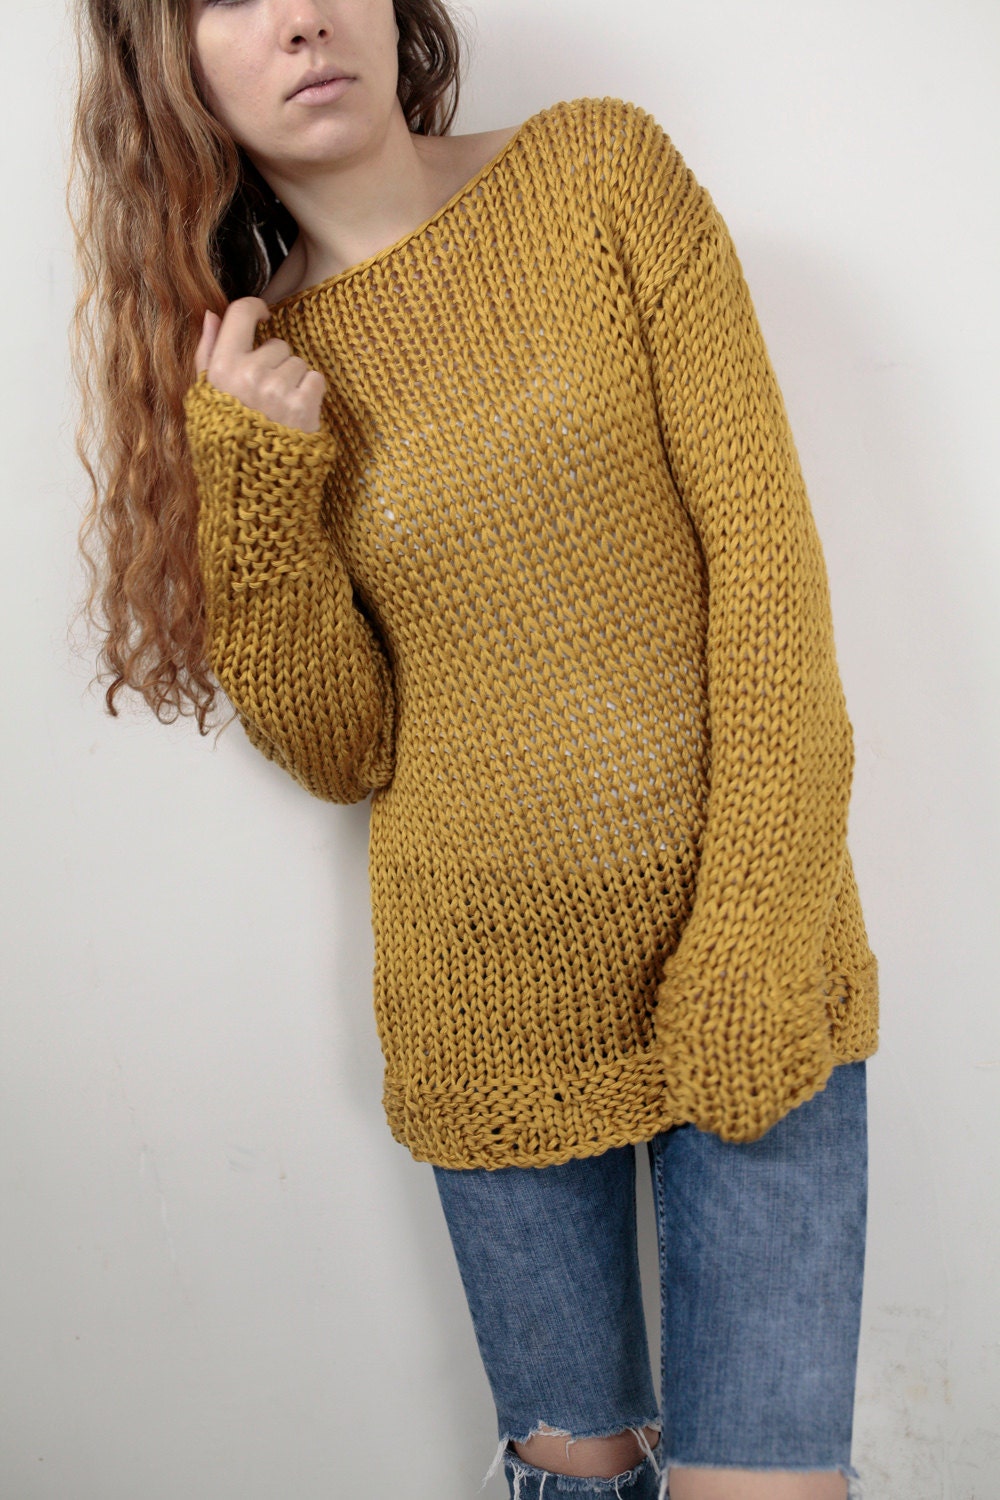 Kleding Dameskleding Sweaters Pullovers Hand gebreide vrouw trui trui top bijgesneden trui mosterd gele wollen trui 